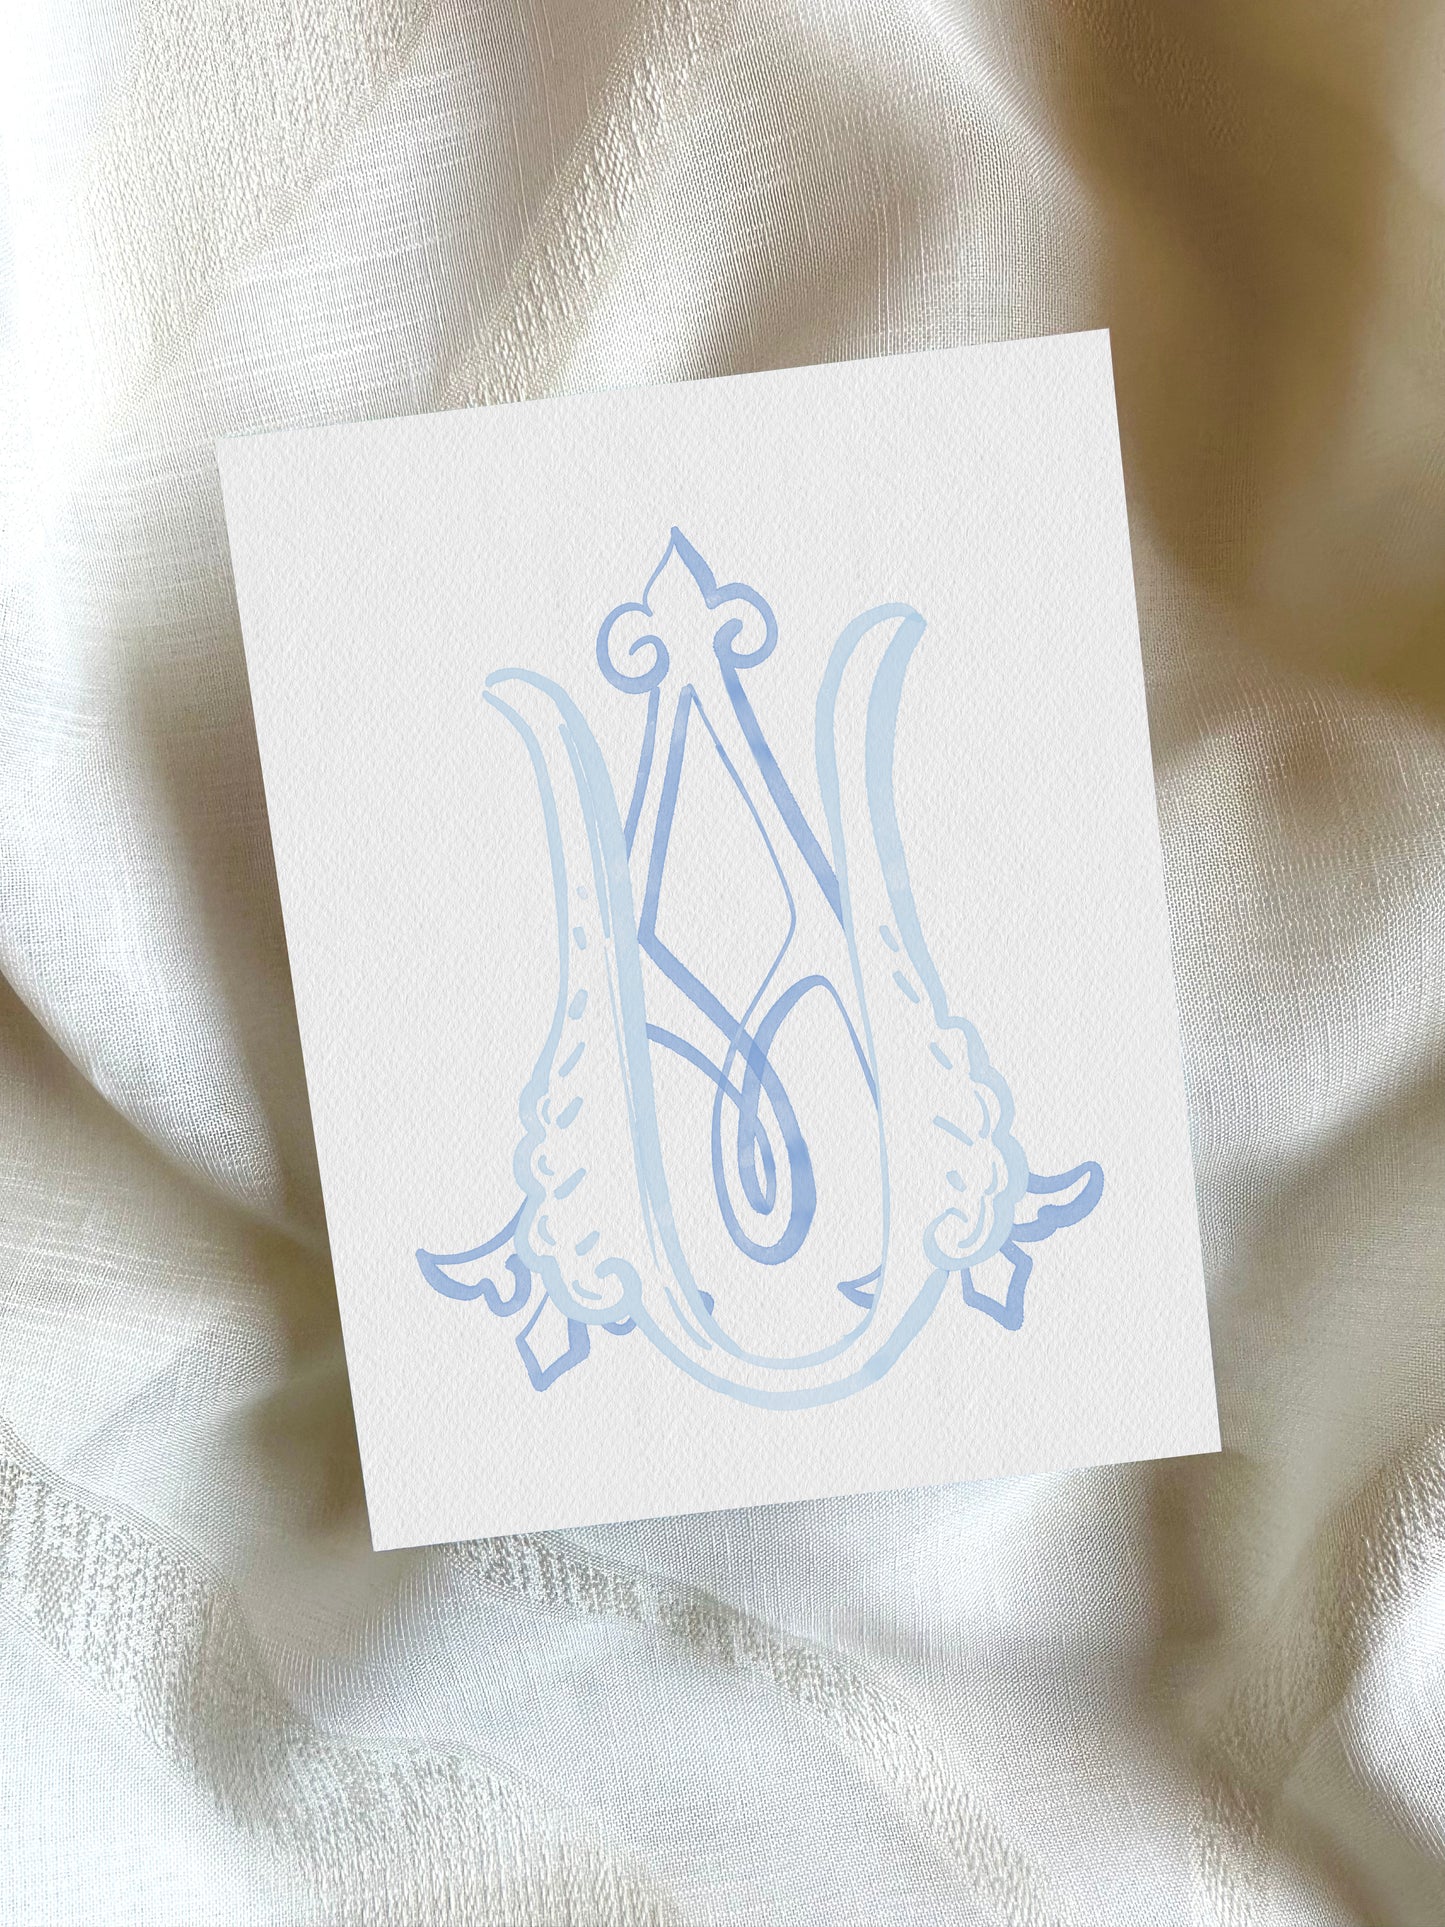 2 Letter Monogram with Letters AU UA | Digital Download - Wedding Monogram SVG, Personal Logo, Wedding Logo for Wedding Invitations